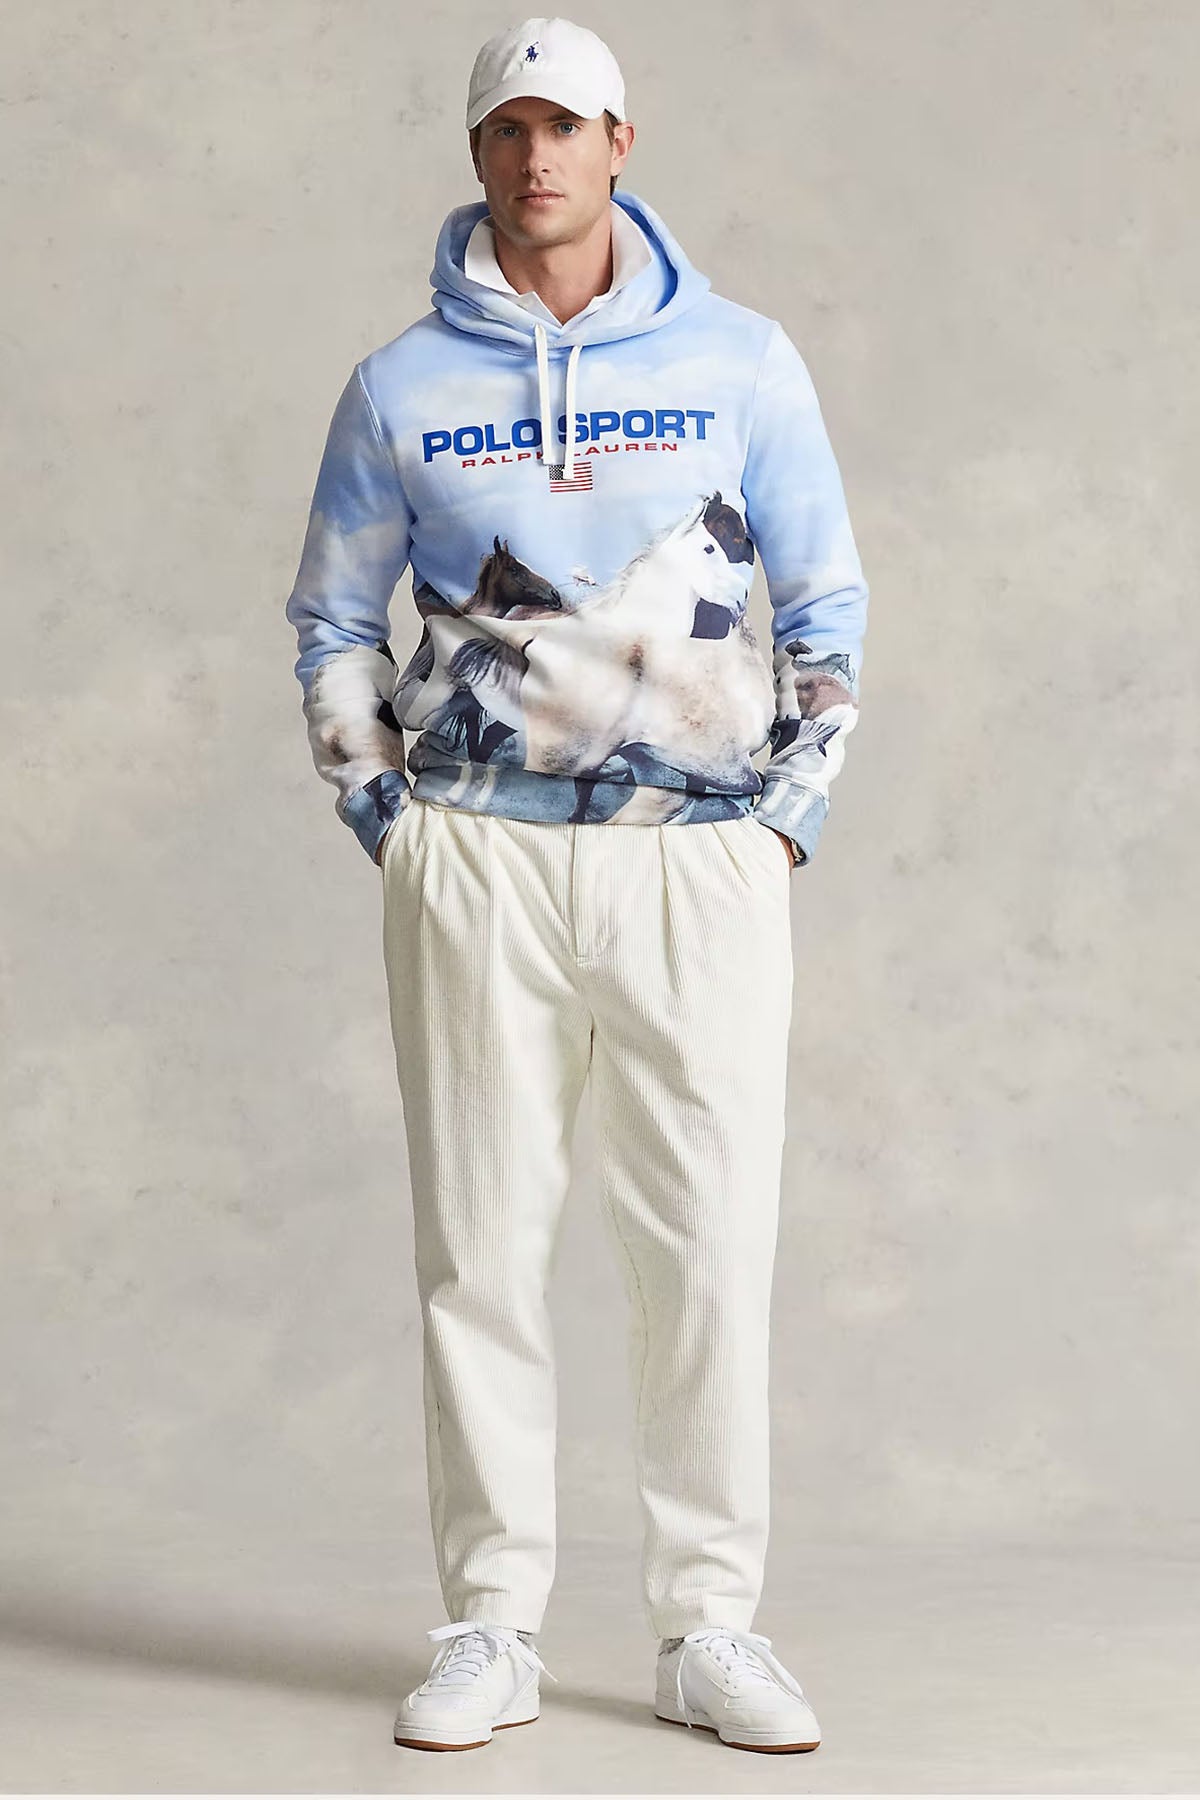 Polo Ralph Lauren Polo Sport Horses Baskılı Kapüşonlu Sweatshirt-Libas Trendy Fashion Store